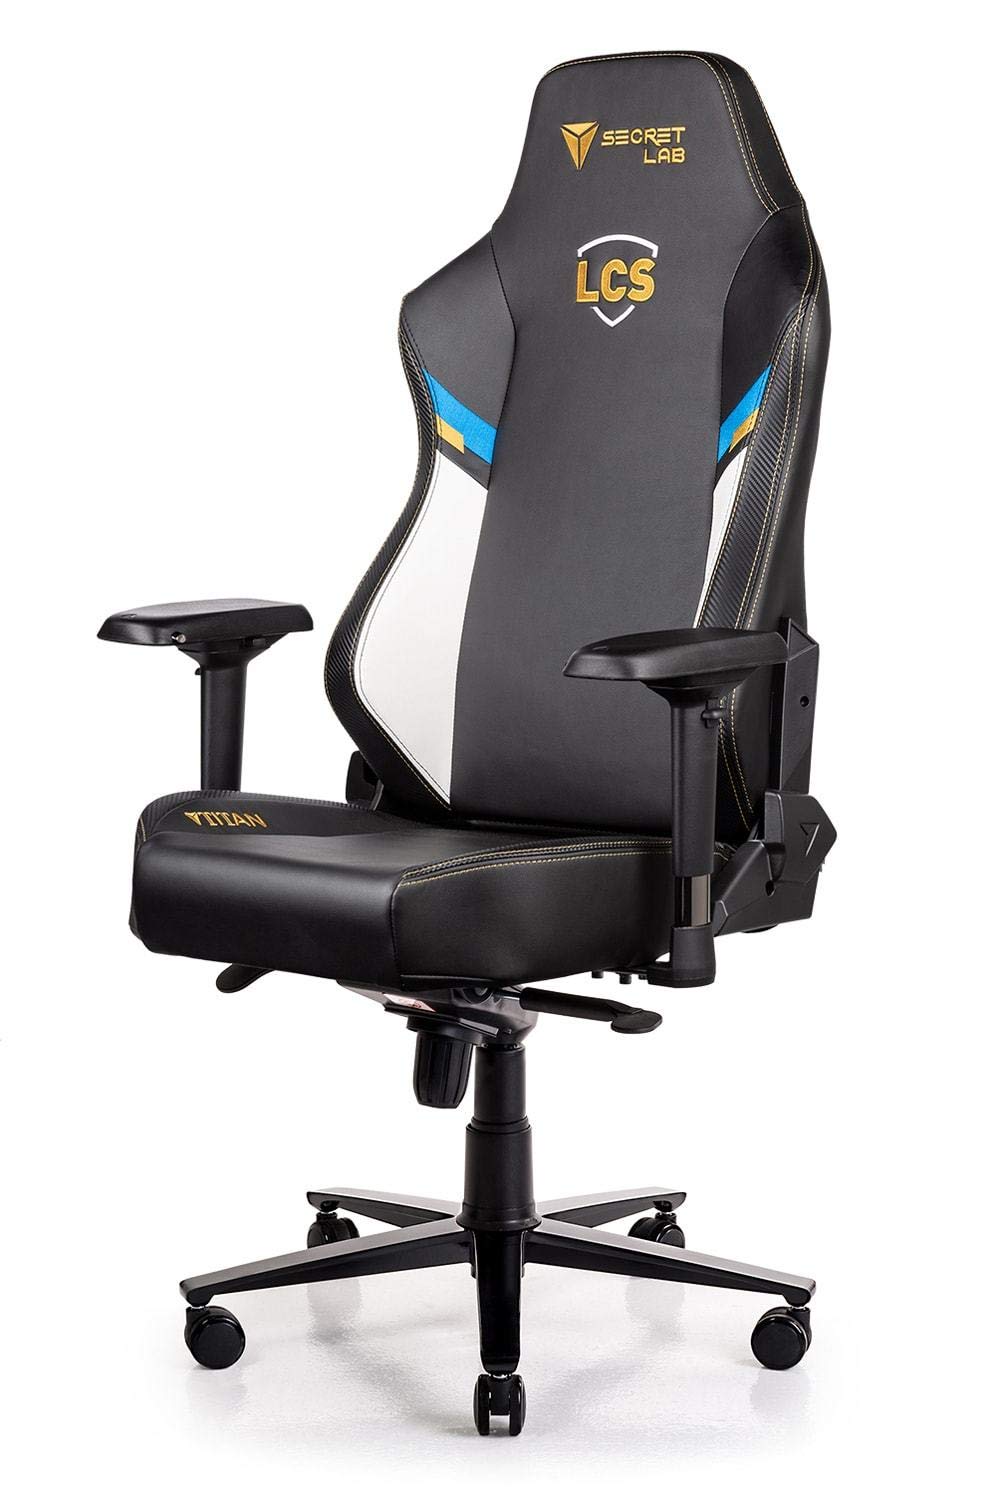 gaming chairs secret lab